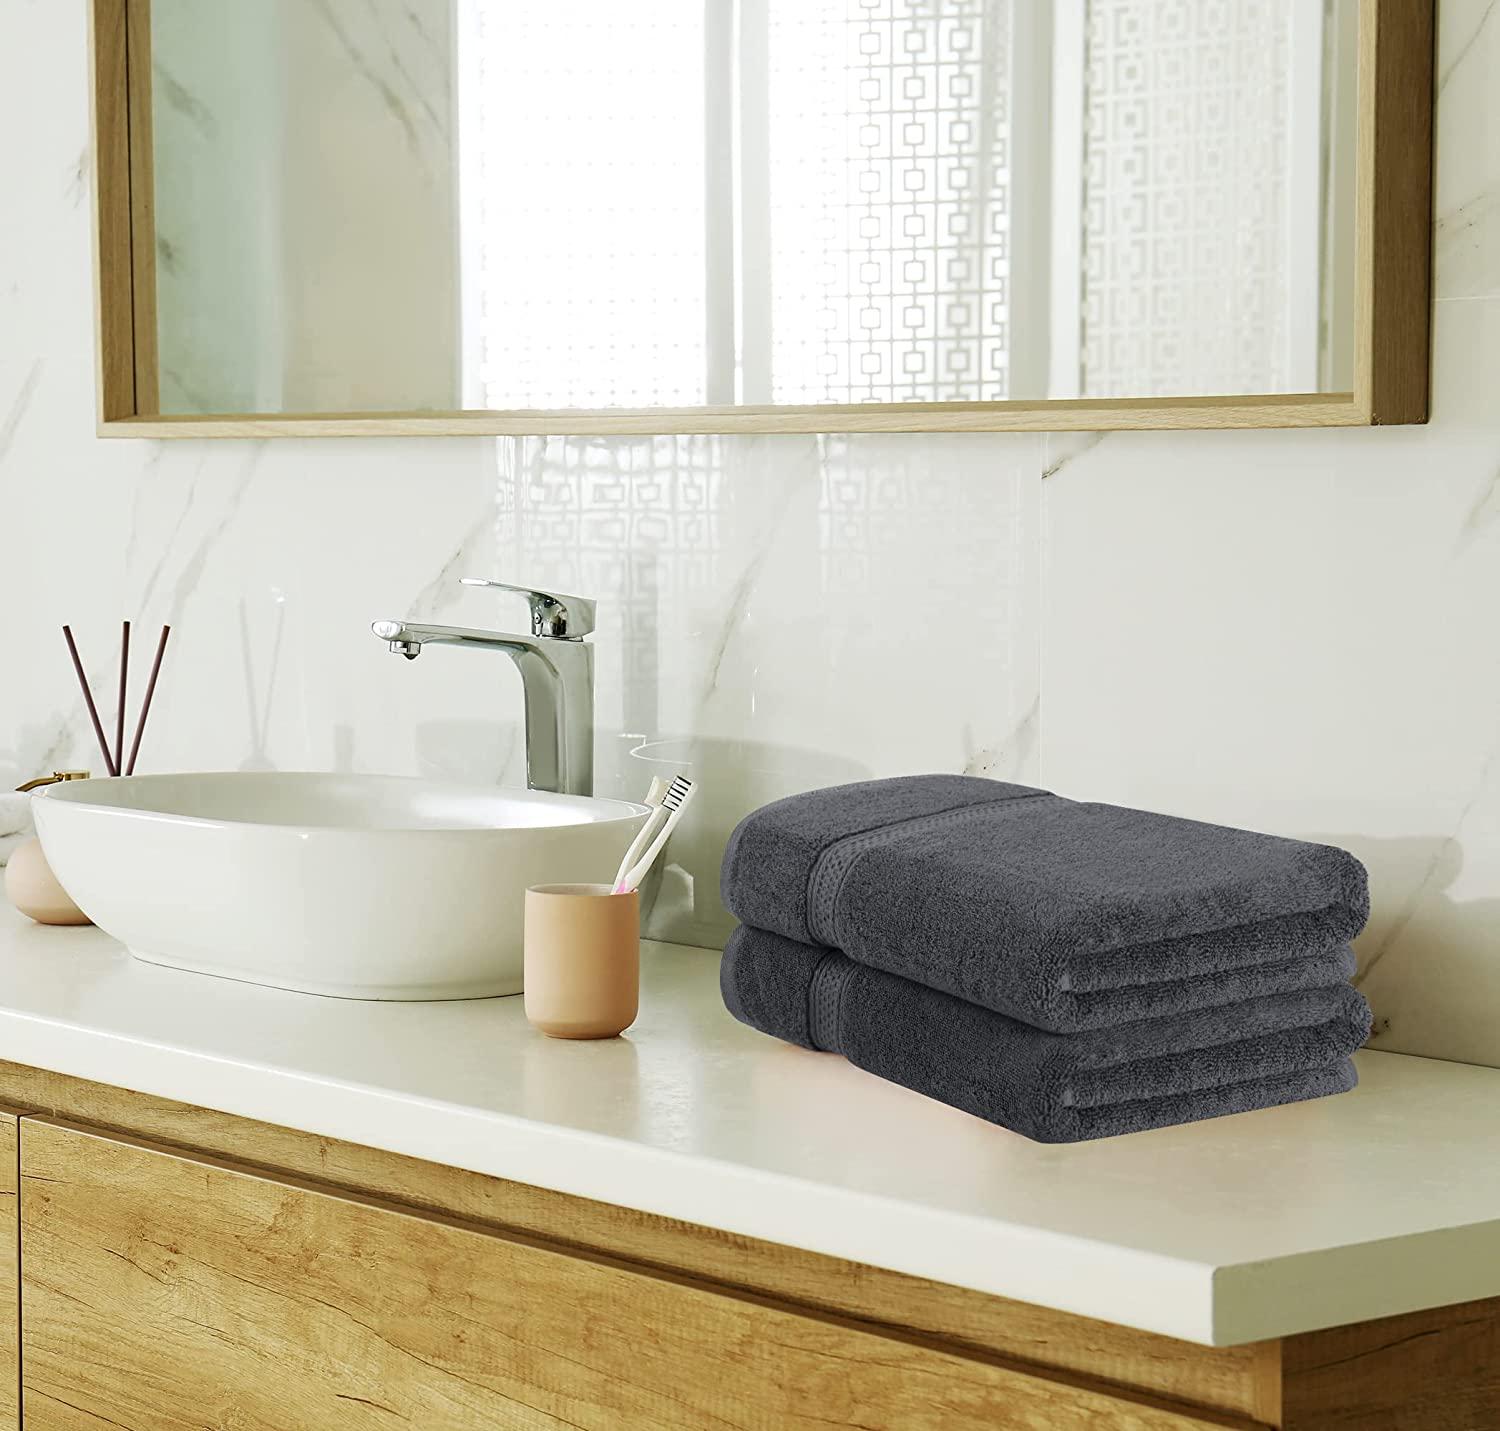 Premium 8 Piece Towel Set (Electric Blue); 2 Bath Towels, 2 Hand Towels and 4 Washcloths